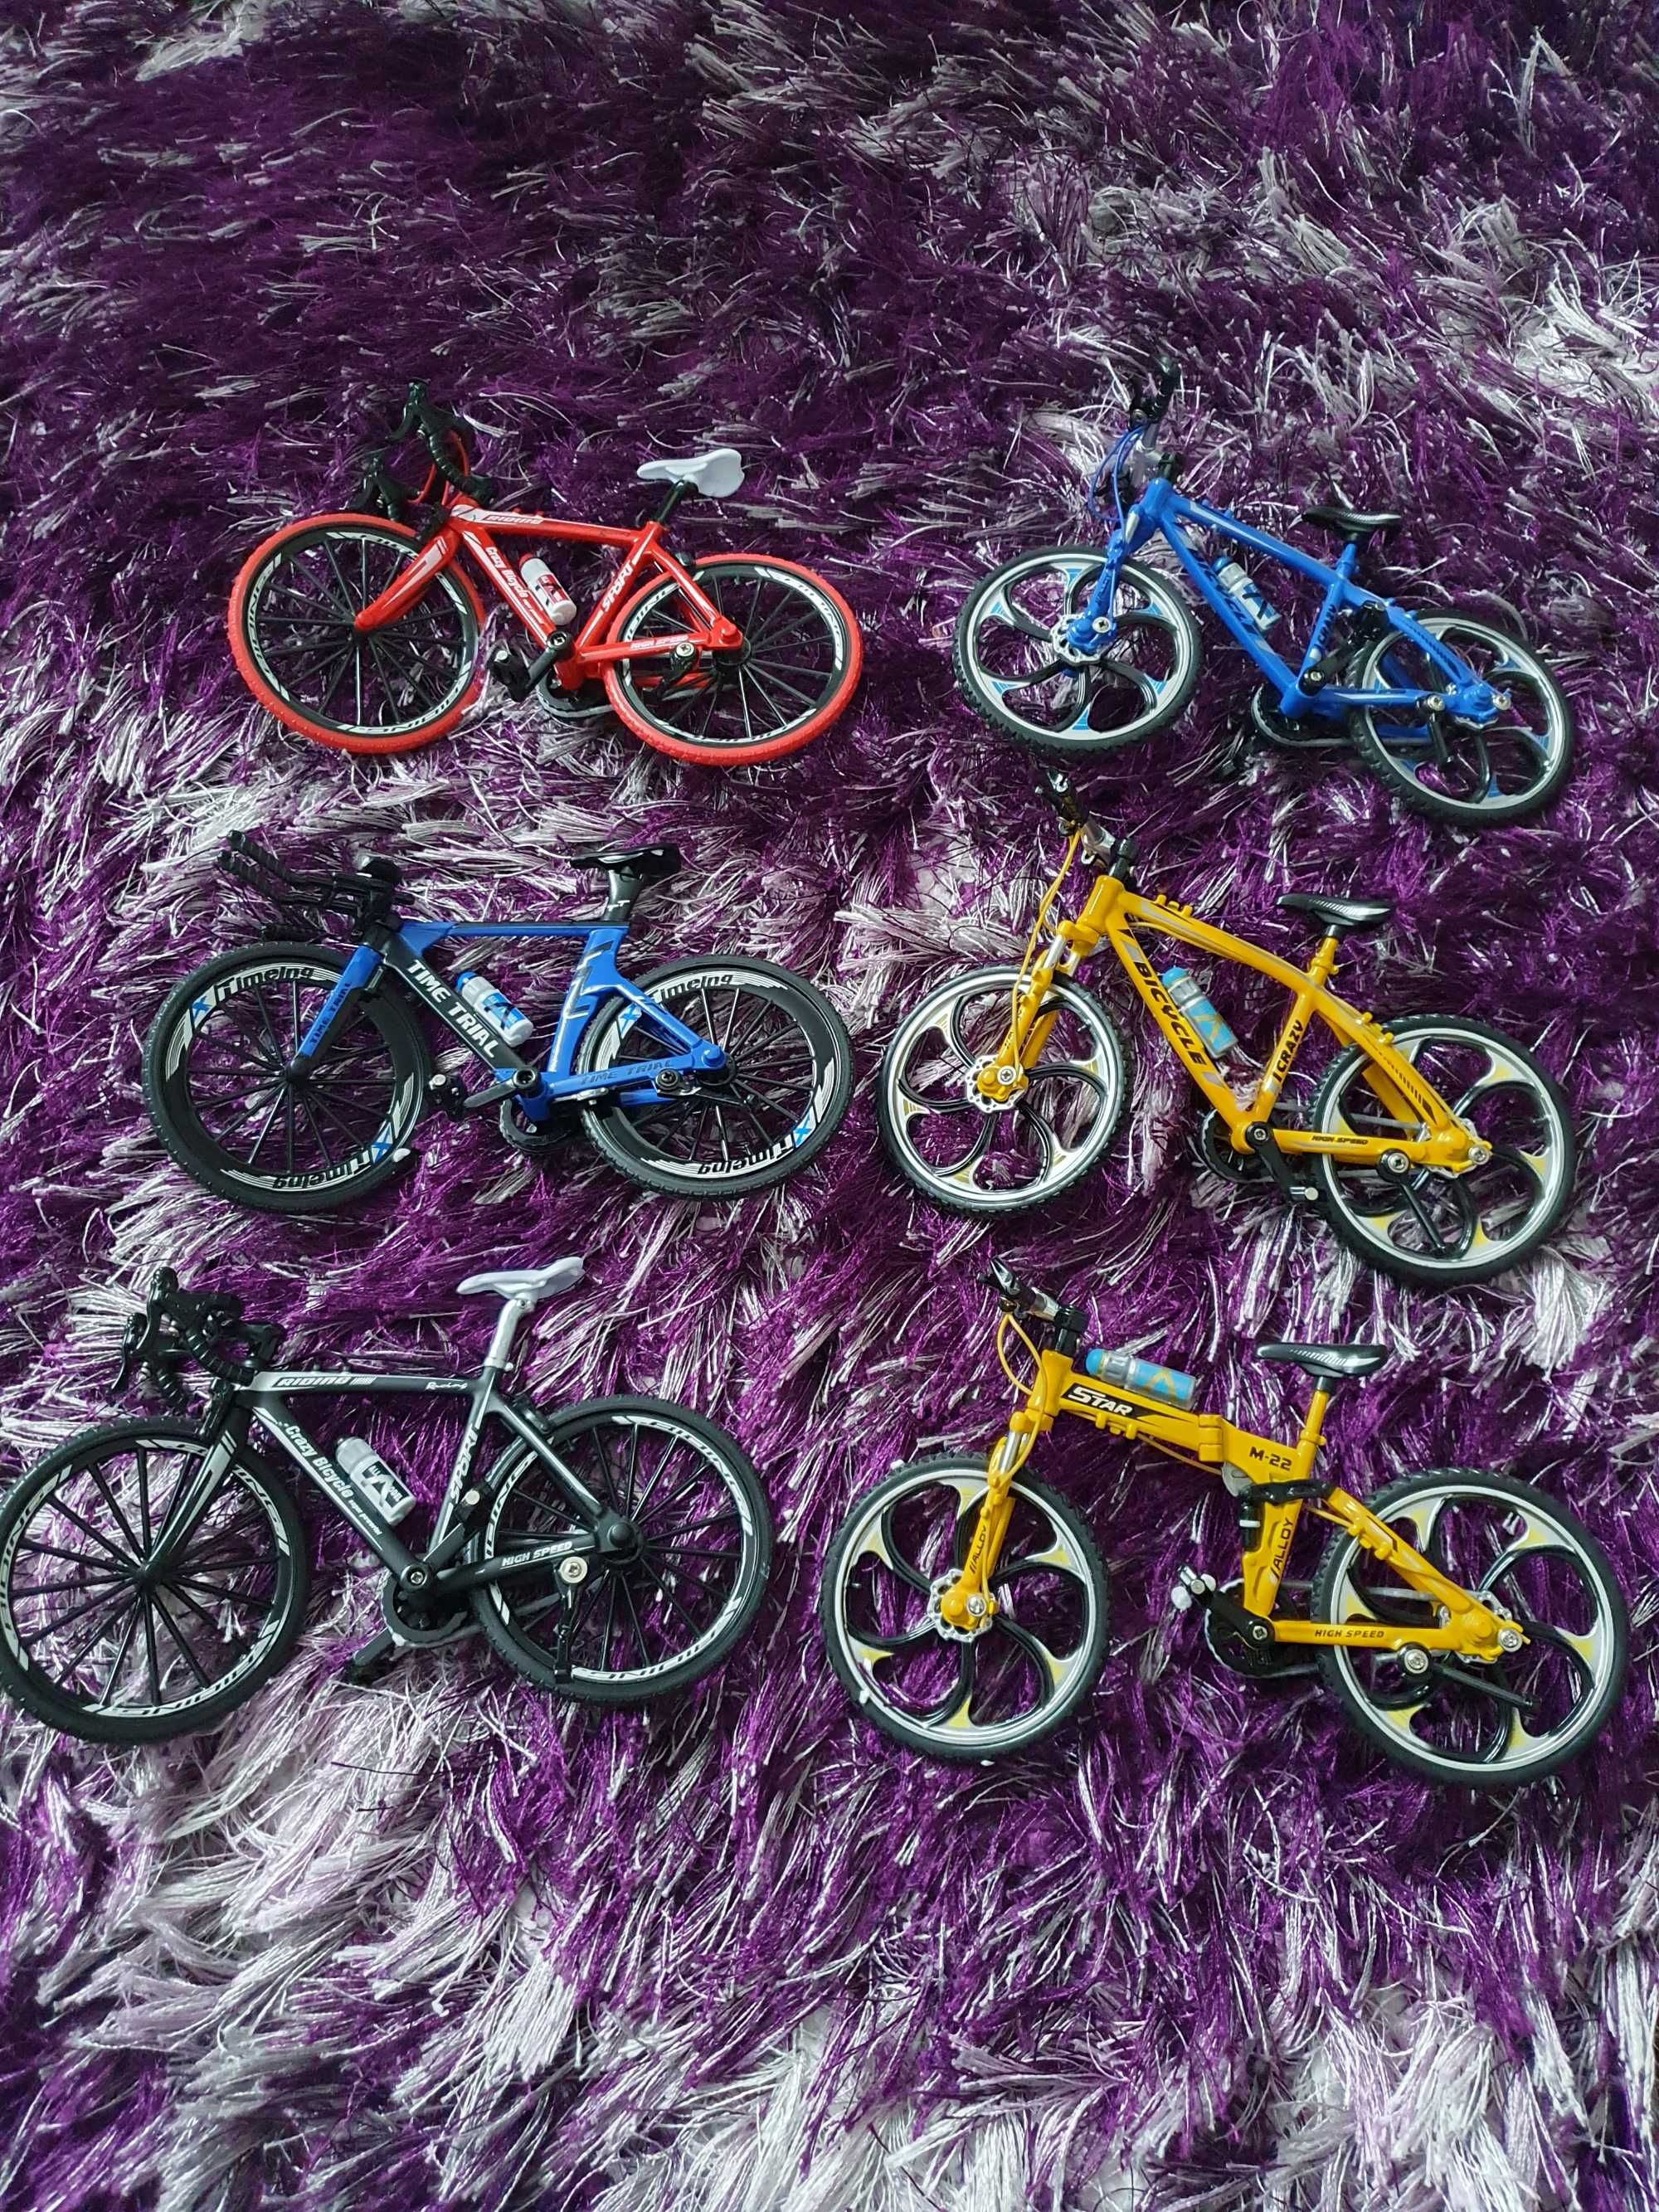 Macheta bicicleta metalica 18 cm diferite  modele